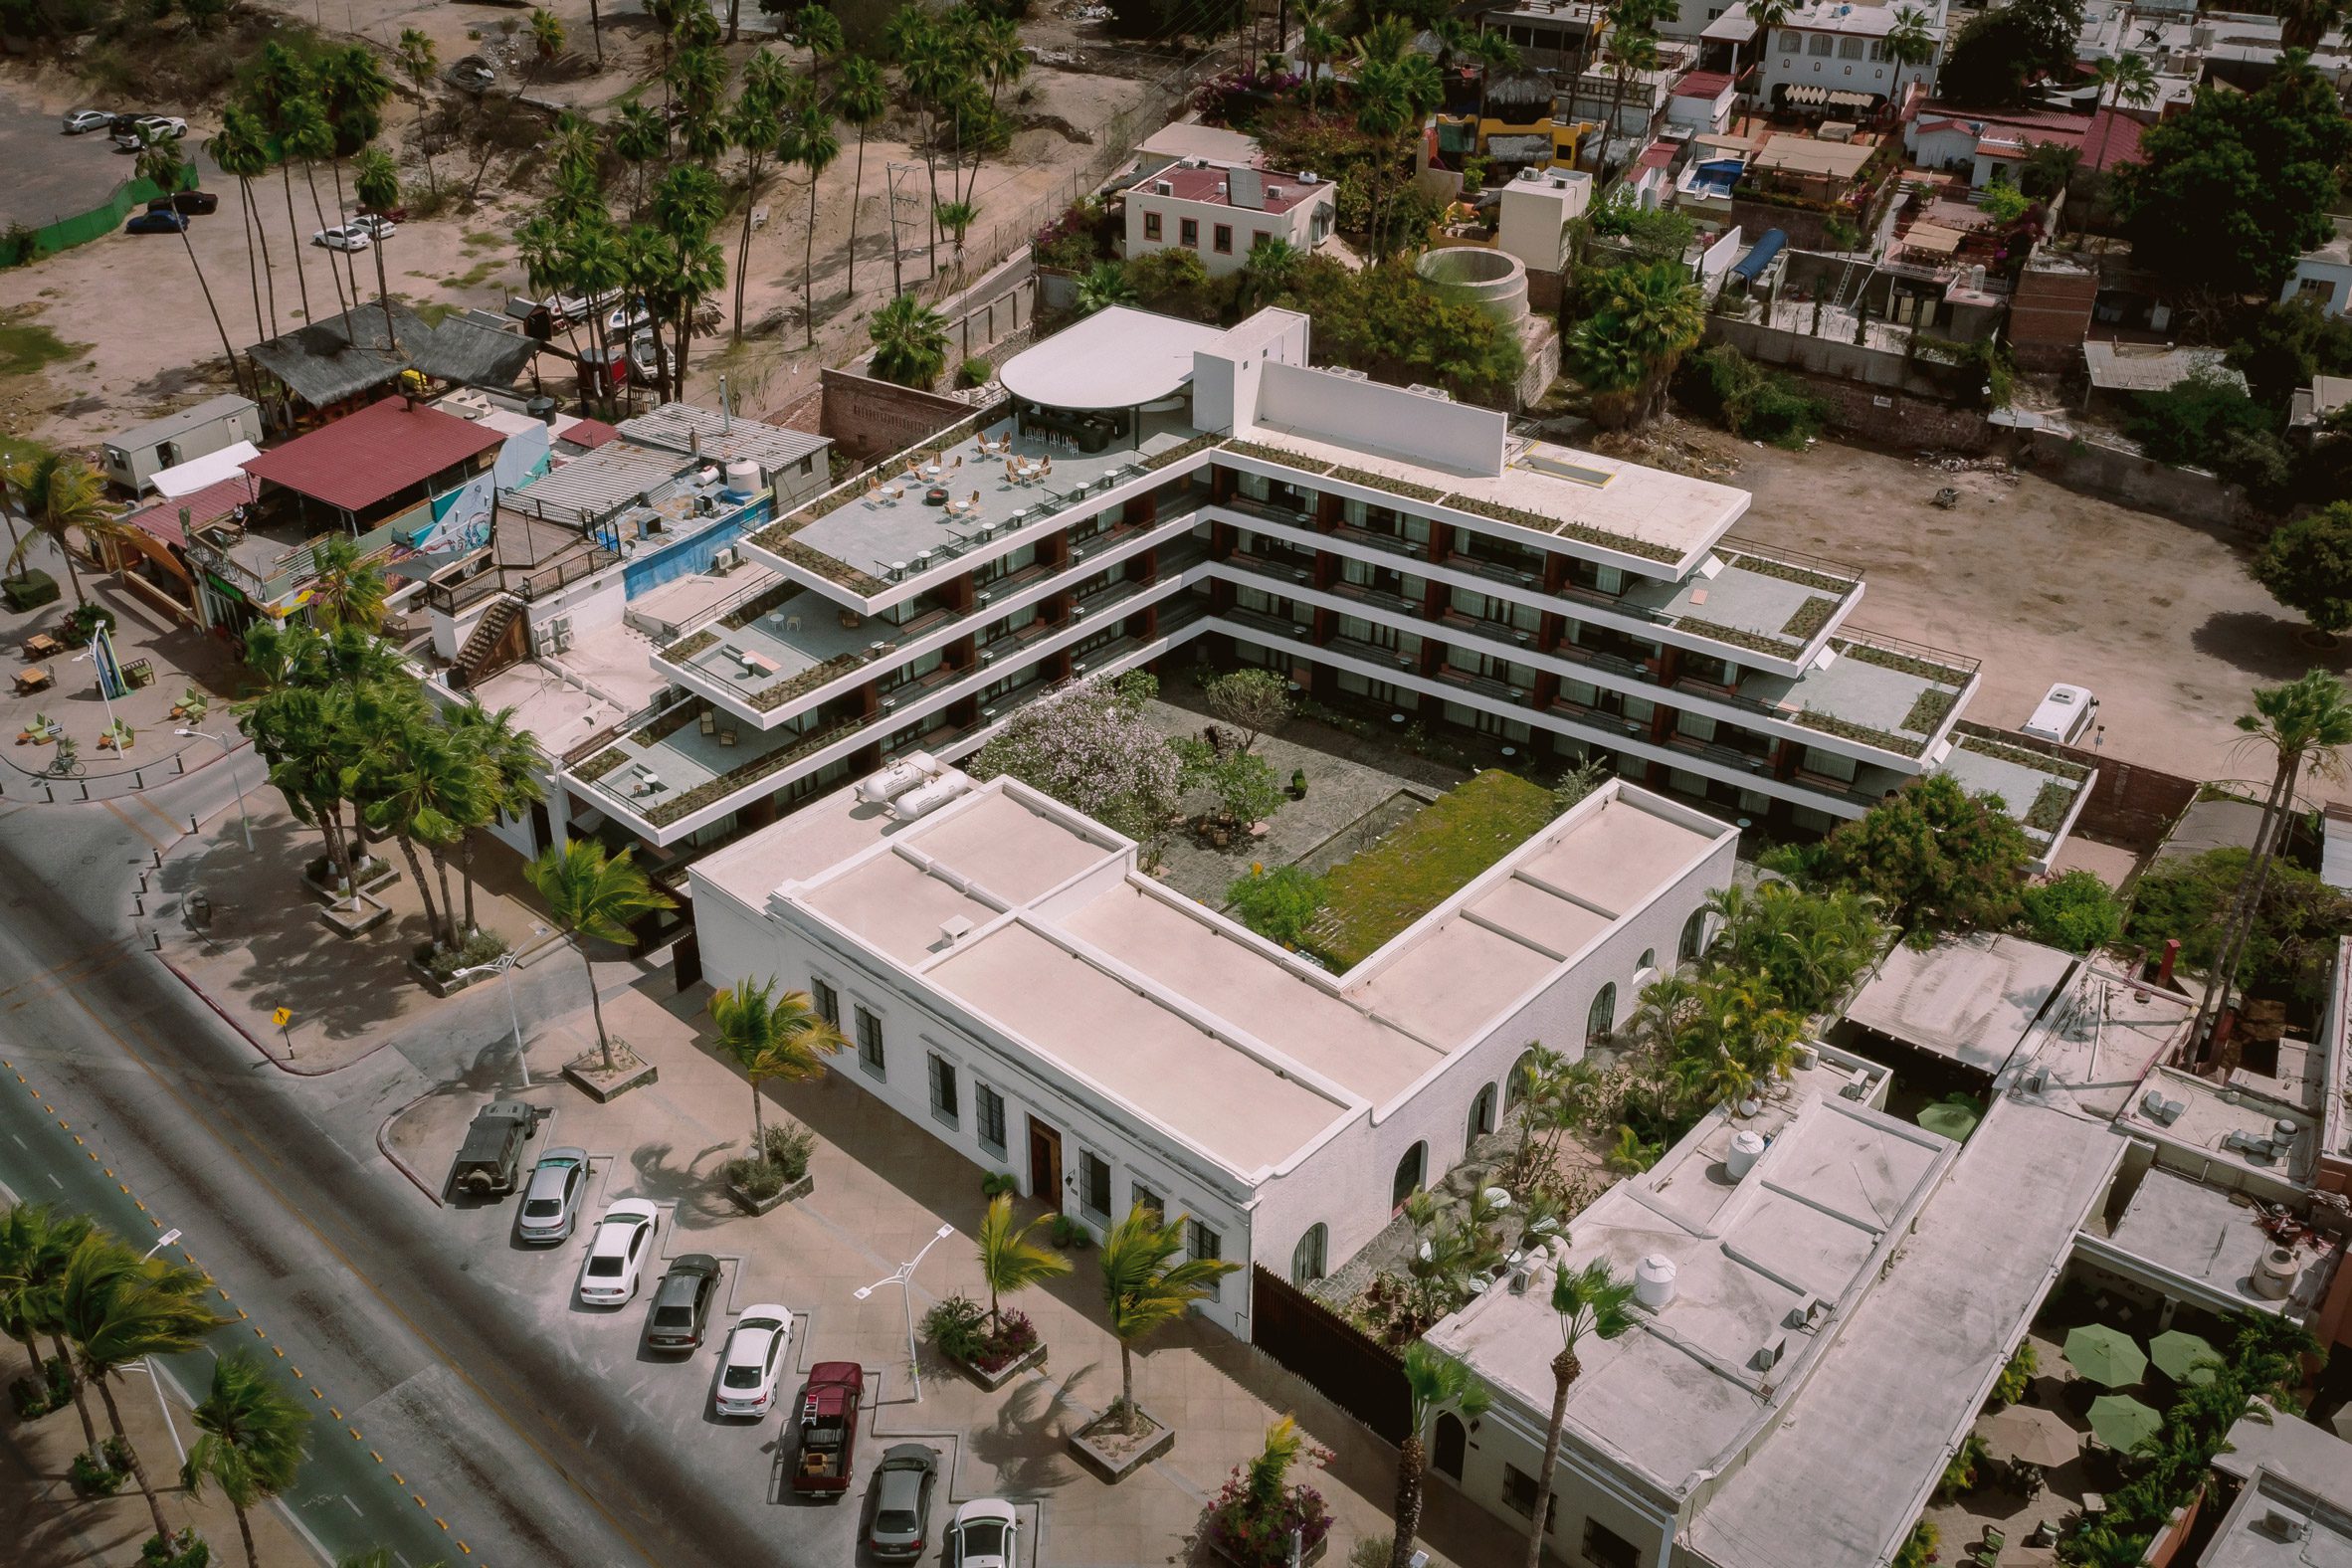 Baja Club Hotel is an L-shaped building